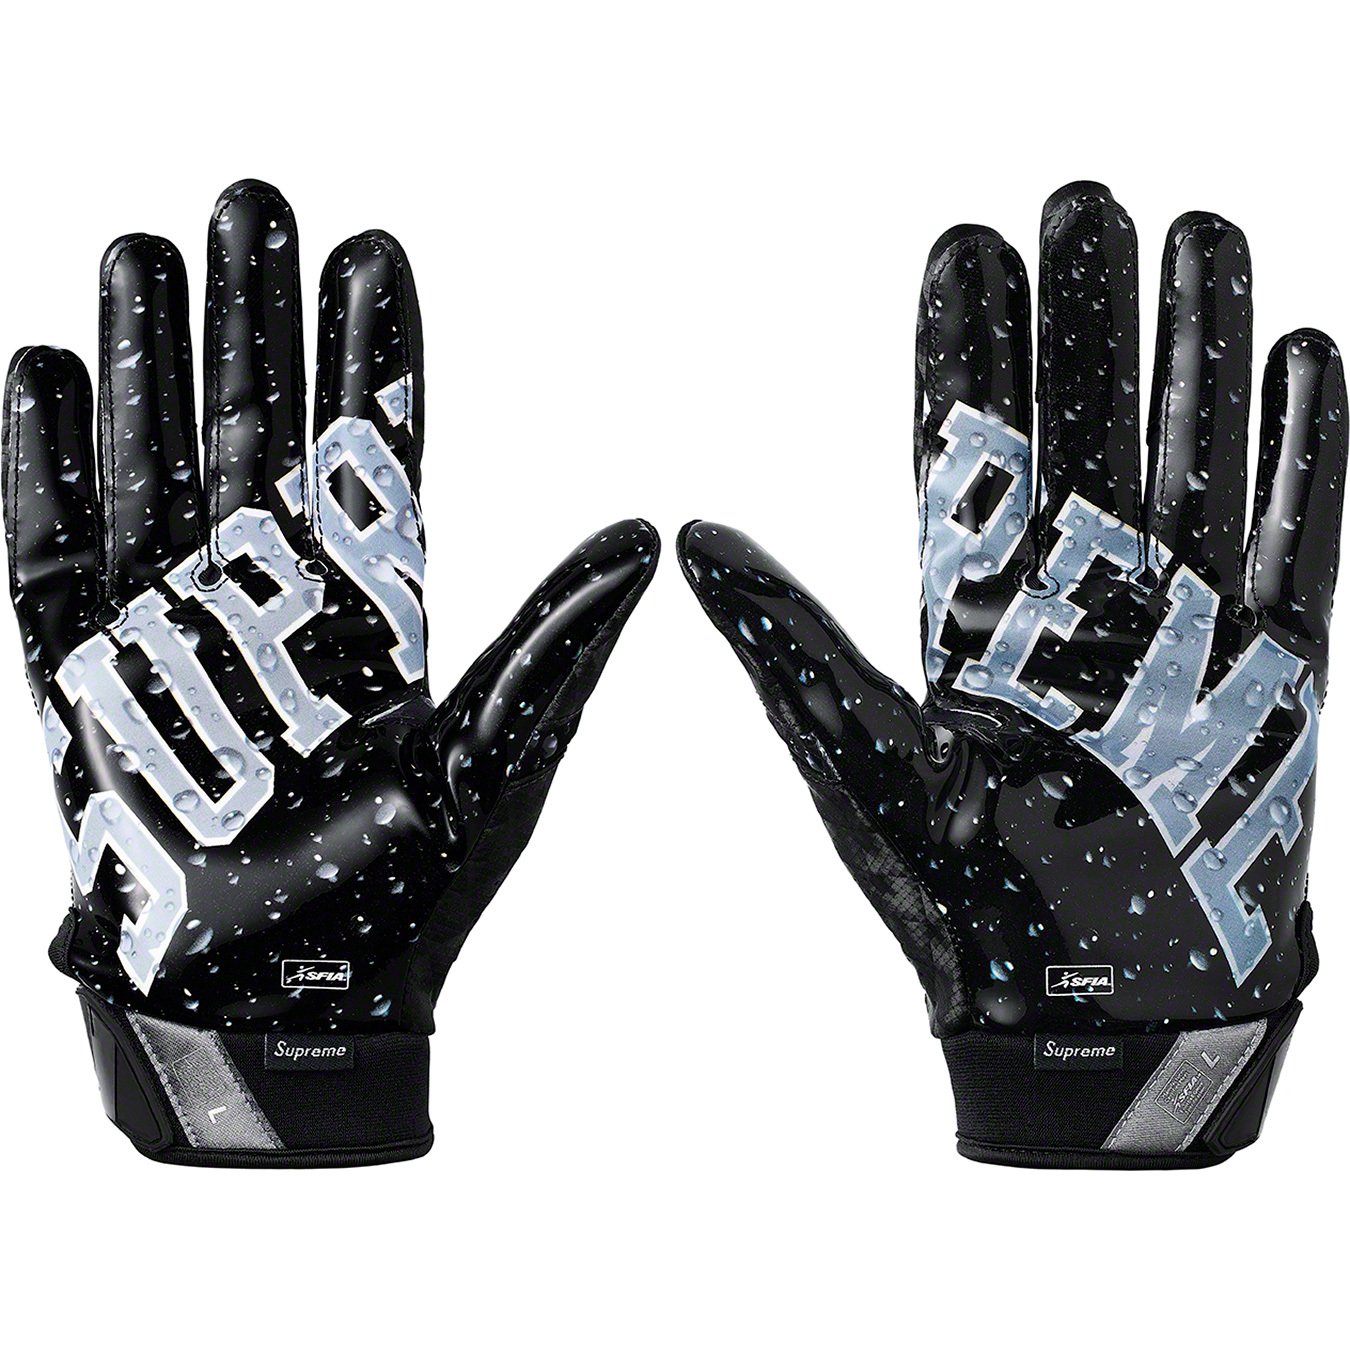 Supreme®/Nike® Vapor Jet 4.0 Football Gloves - Supreme Community